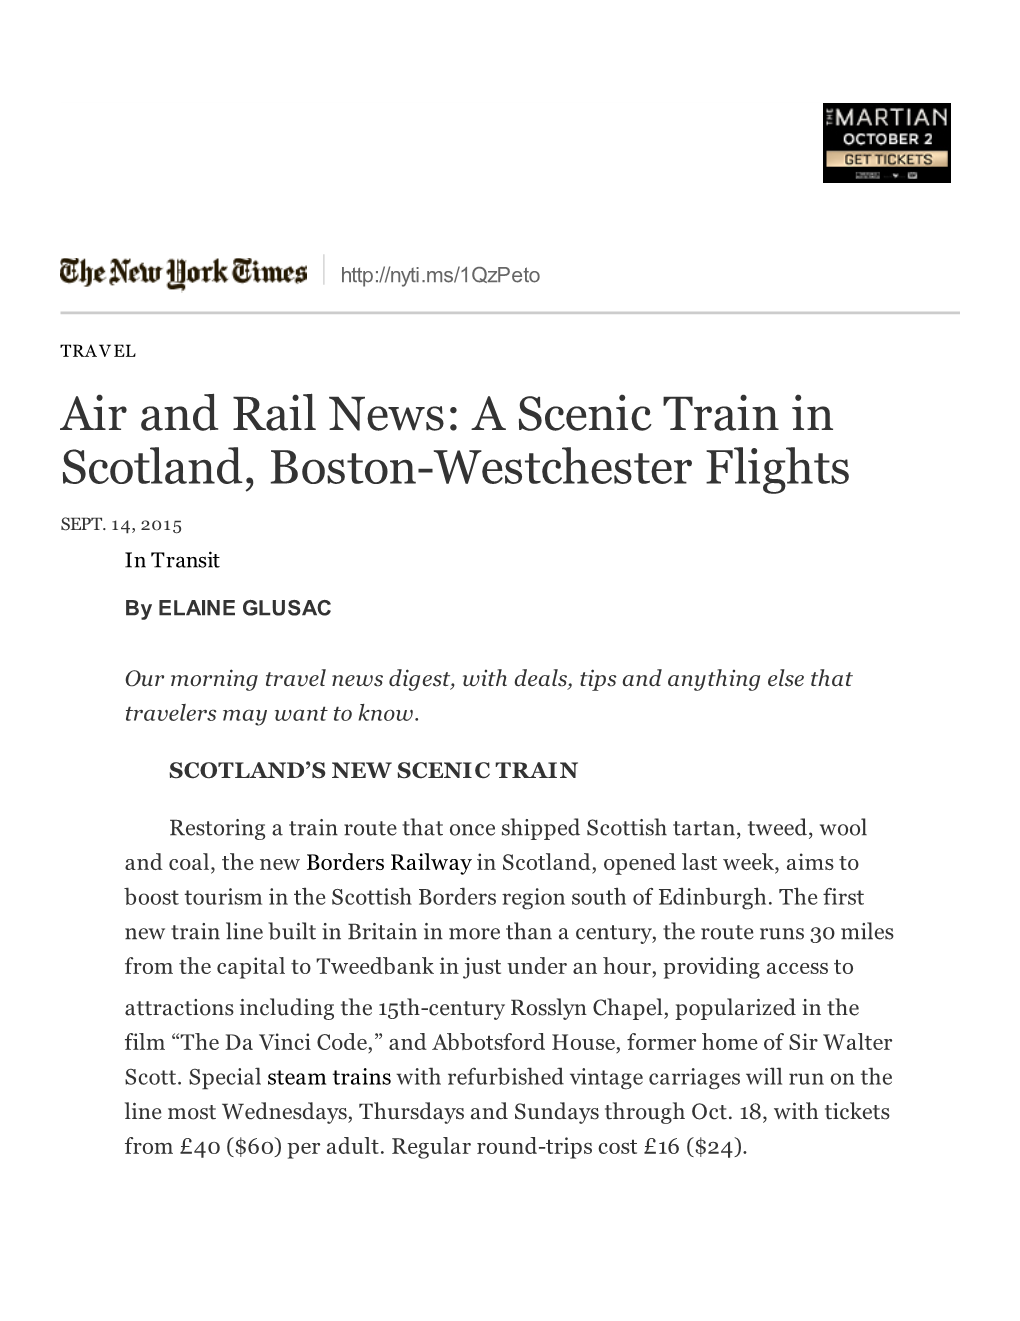 Air and Rail News: a Scenic Train in Scotland, Bostonwestchester Flights